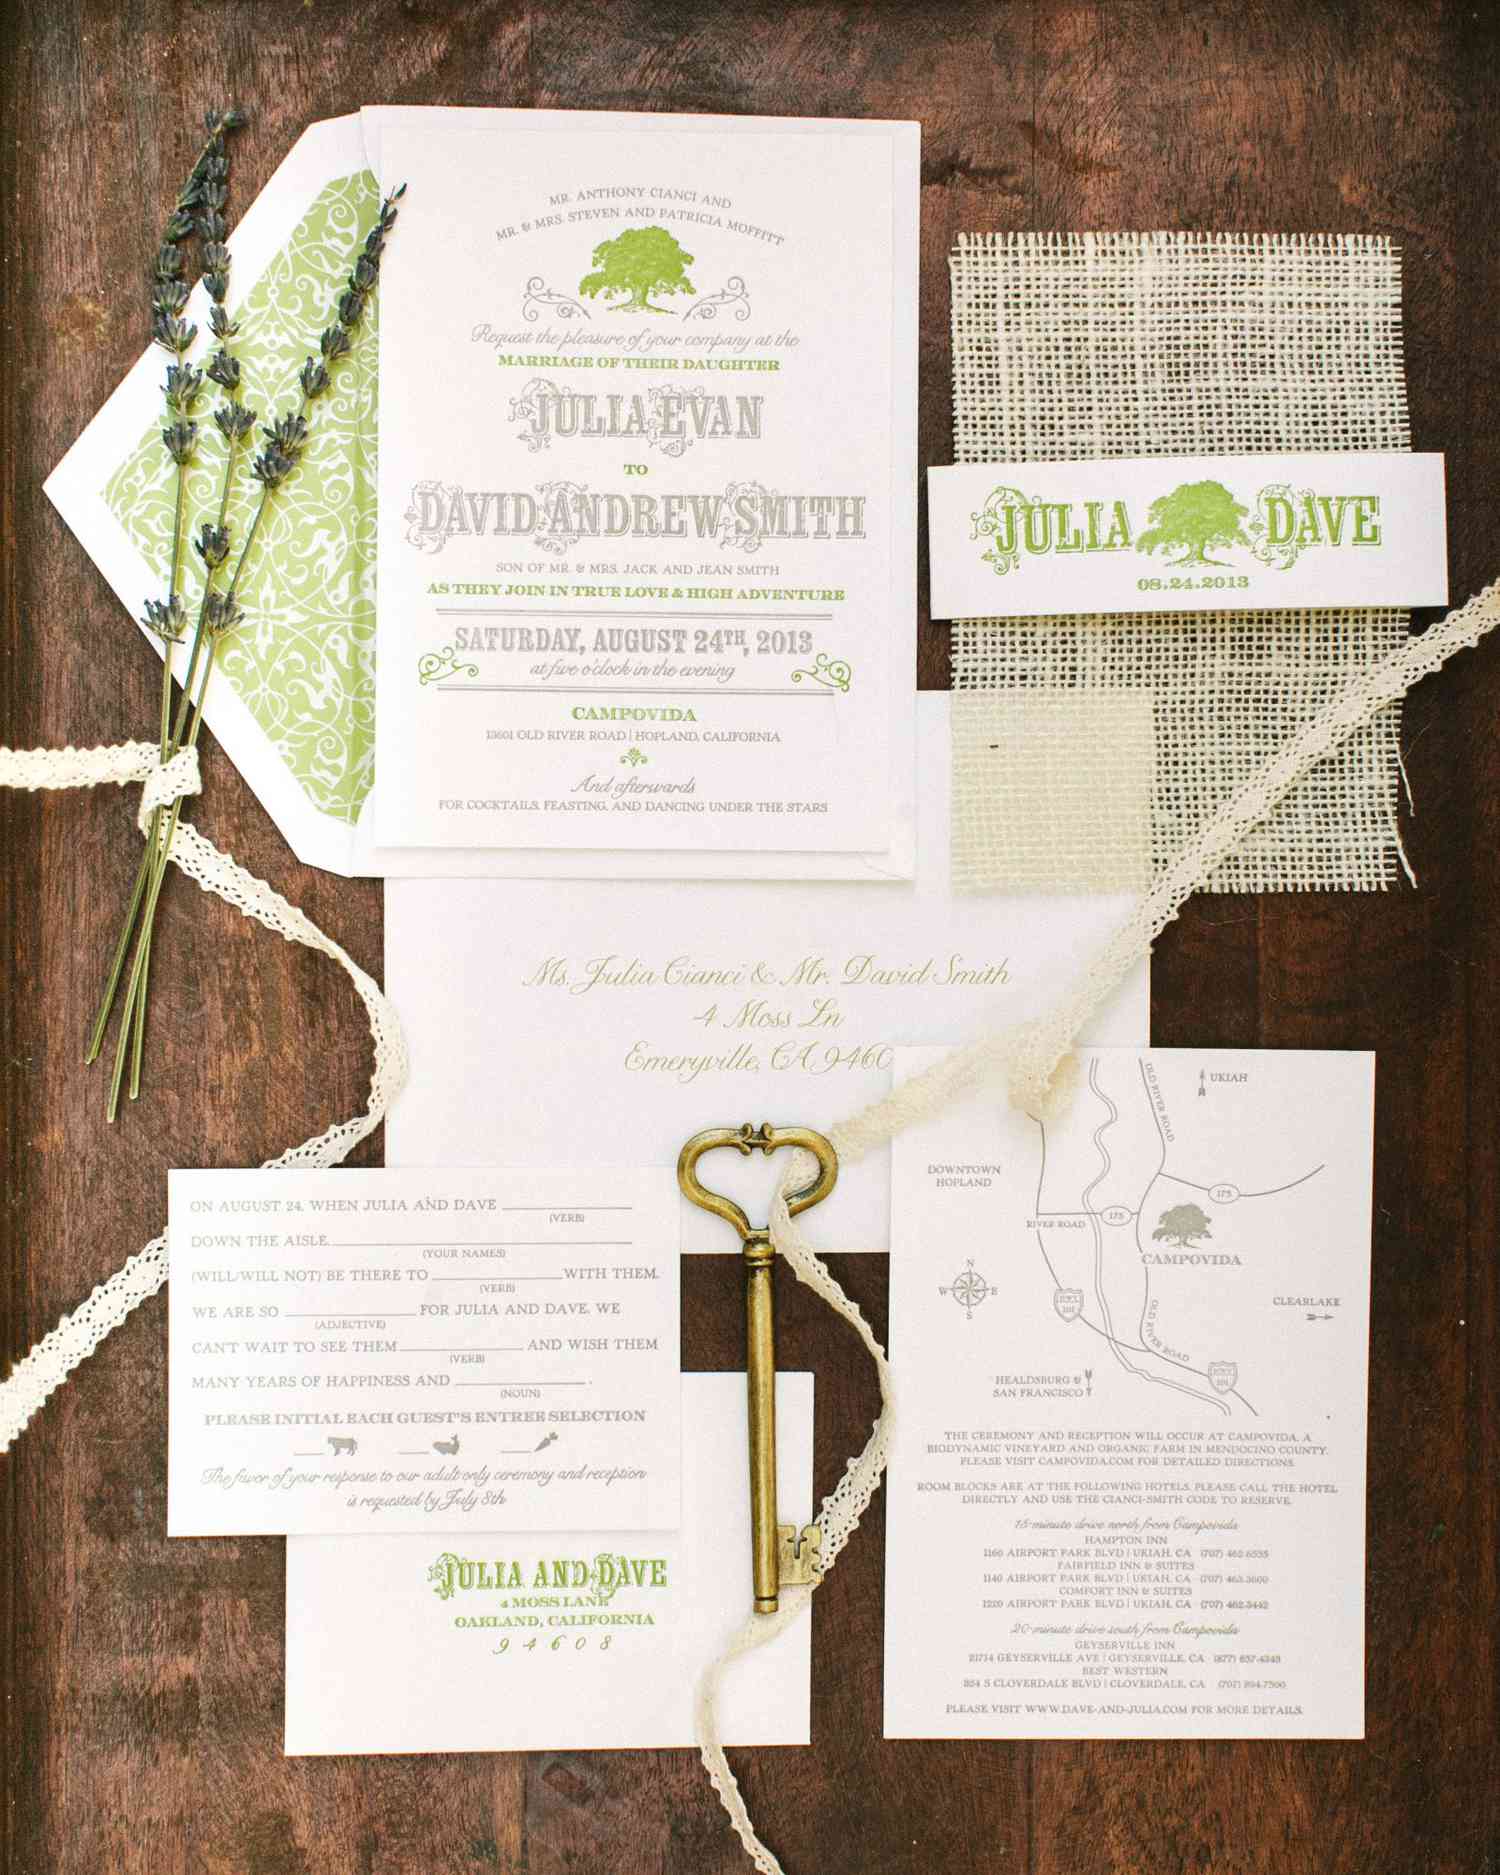 julia-dave-wedding-invite-0414.jpg